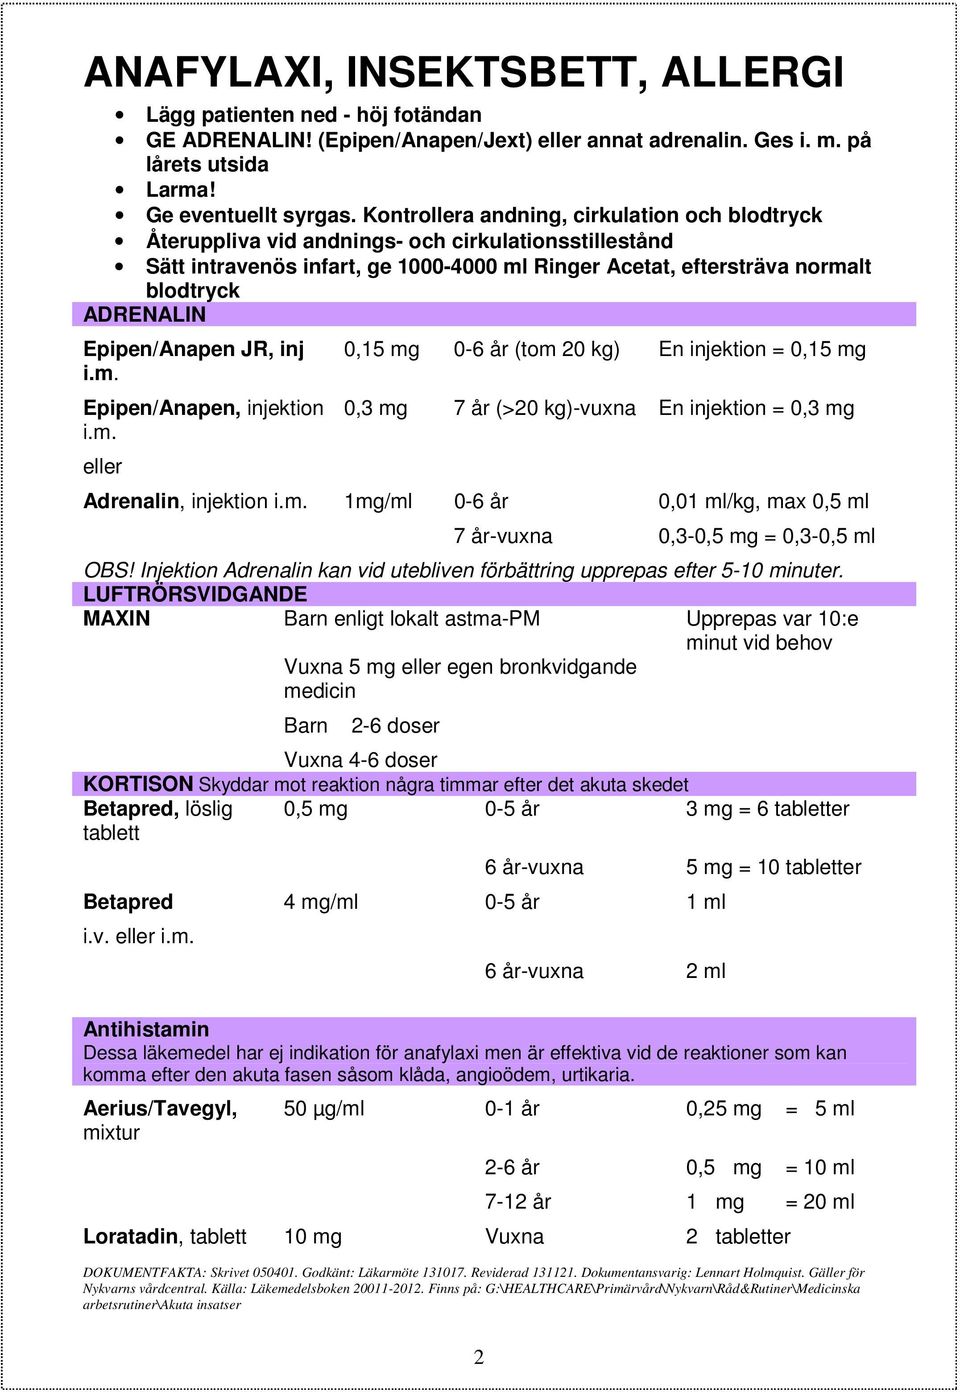 Epipen/Anapen JR, inj i.m. Epipen/Anapen, injektion i.m. eller 0,15 mg 0-6 år (tom 20 kg) En injektion = 0,15 mg 0,3 mg 7 år (>20 kg)-vuxna En injektion = 0,3 mg Adrenalin, injektion i.m. 1mg/ml 0-6 år 0,01 ml/kg, max 0,5 ml 7 år-vuxna 0,3-0,5 mg = 0,3-0,5 ml OBS!